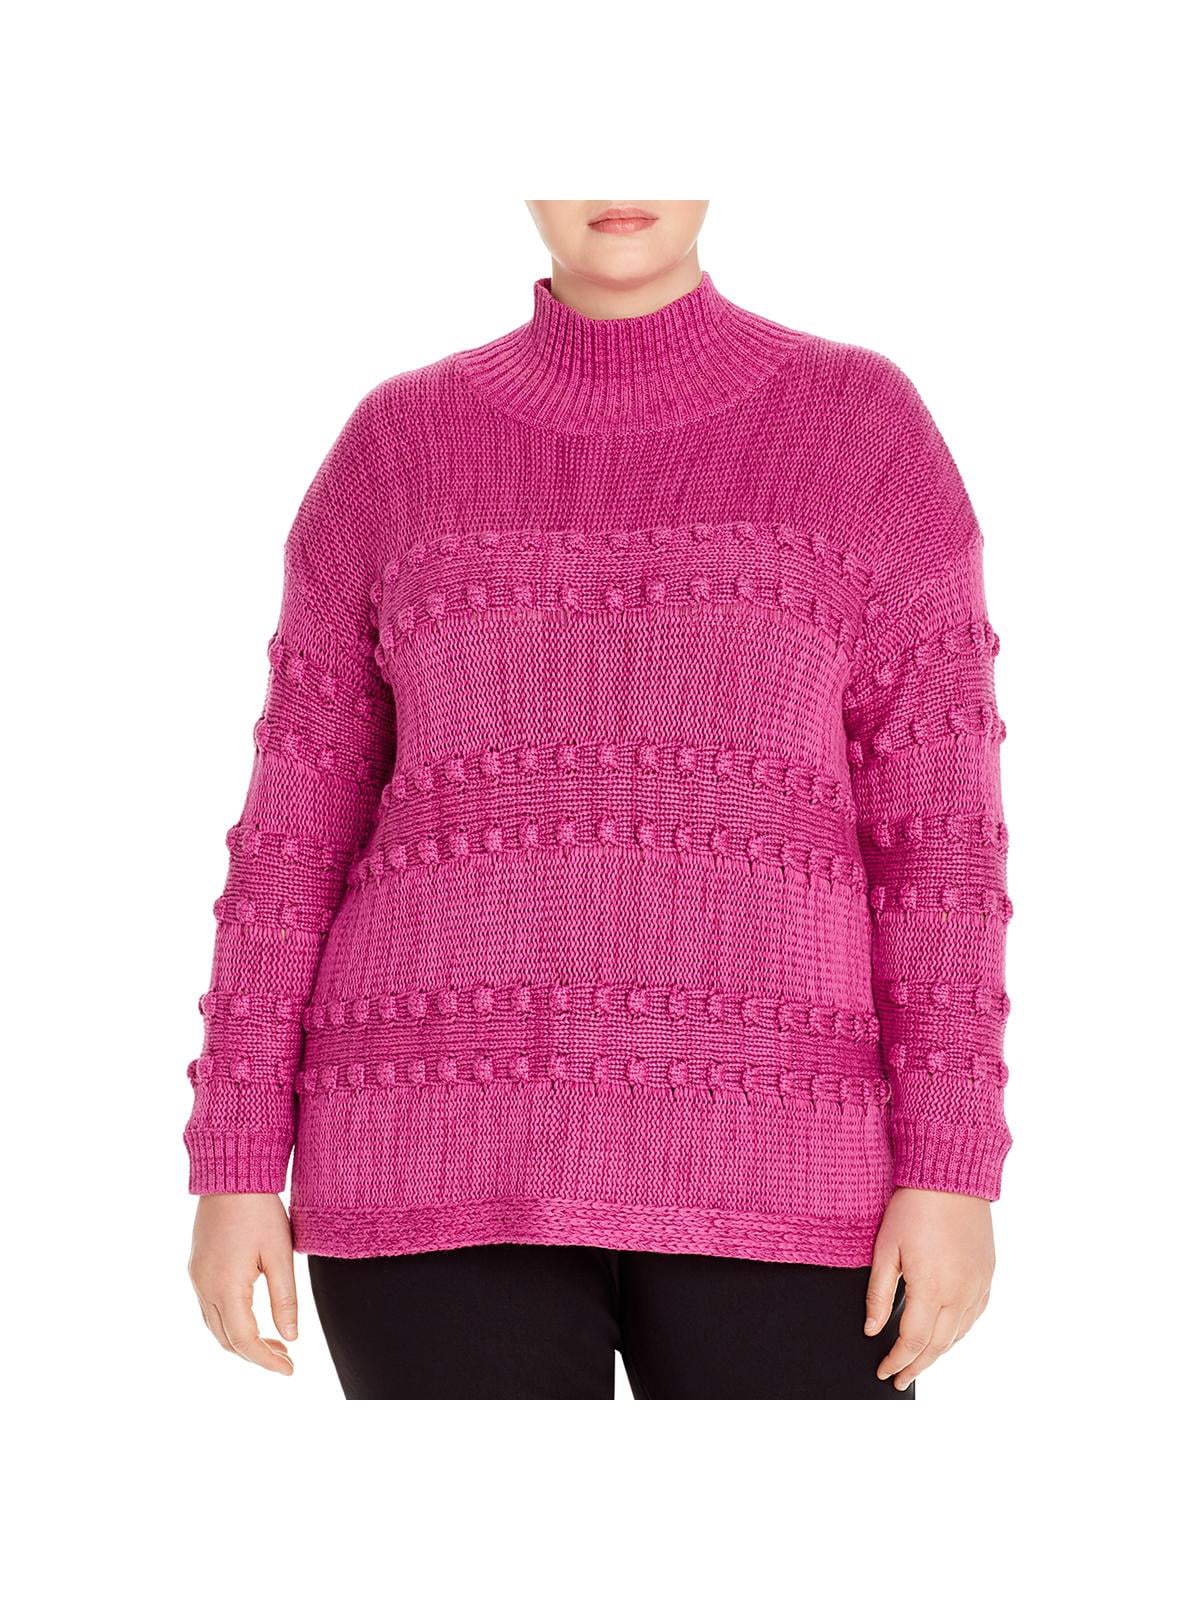 THE LIMITED NEW Raspberry Purple Surplice Long Sleeve Wool Blend Sweater sz M 